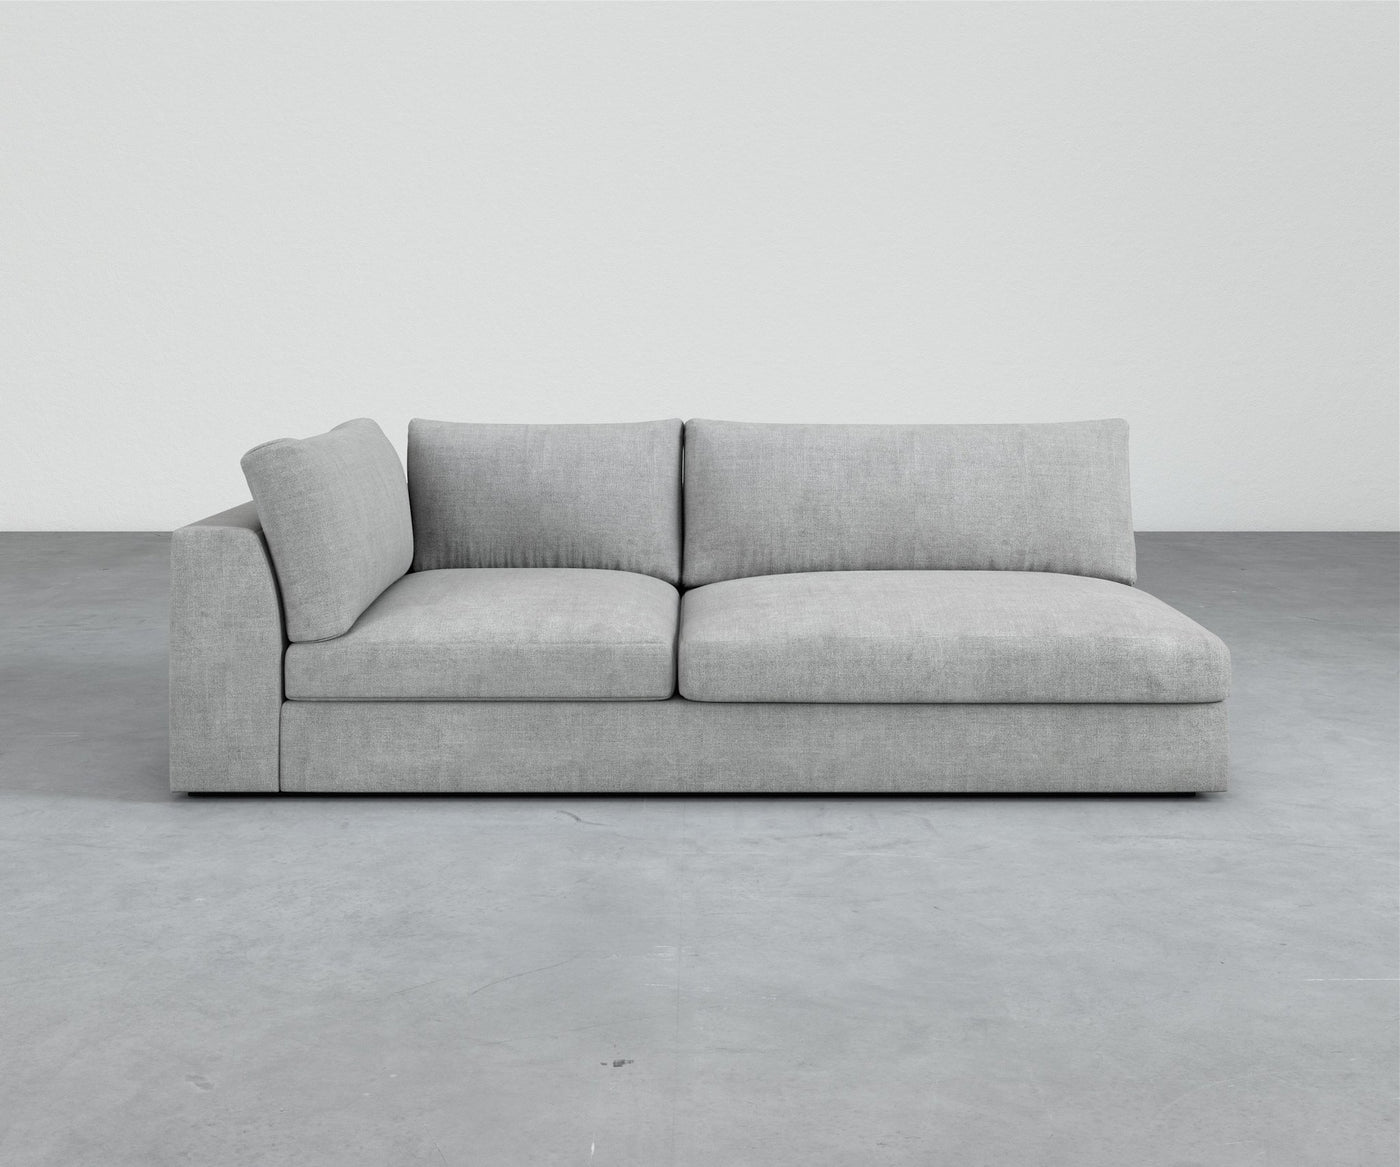 Tuxxy Armless Sofa Return - Modular Component